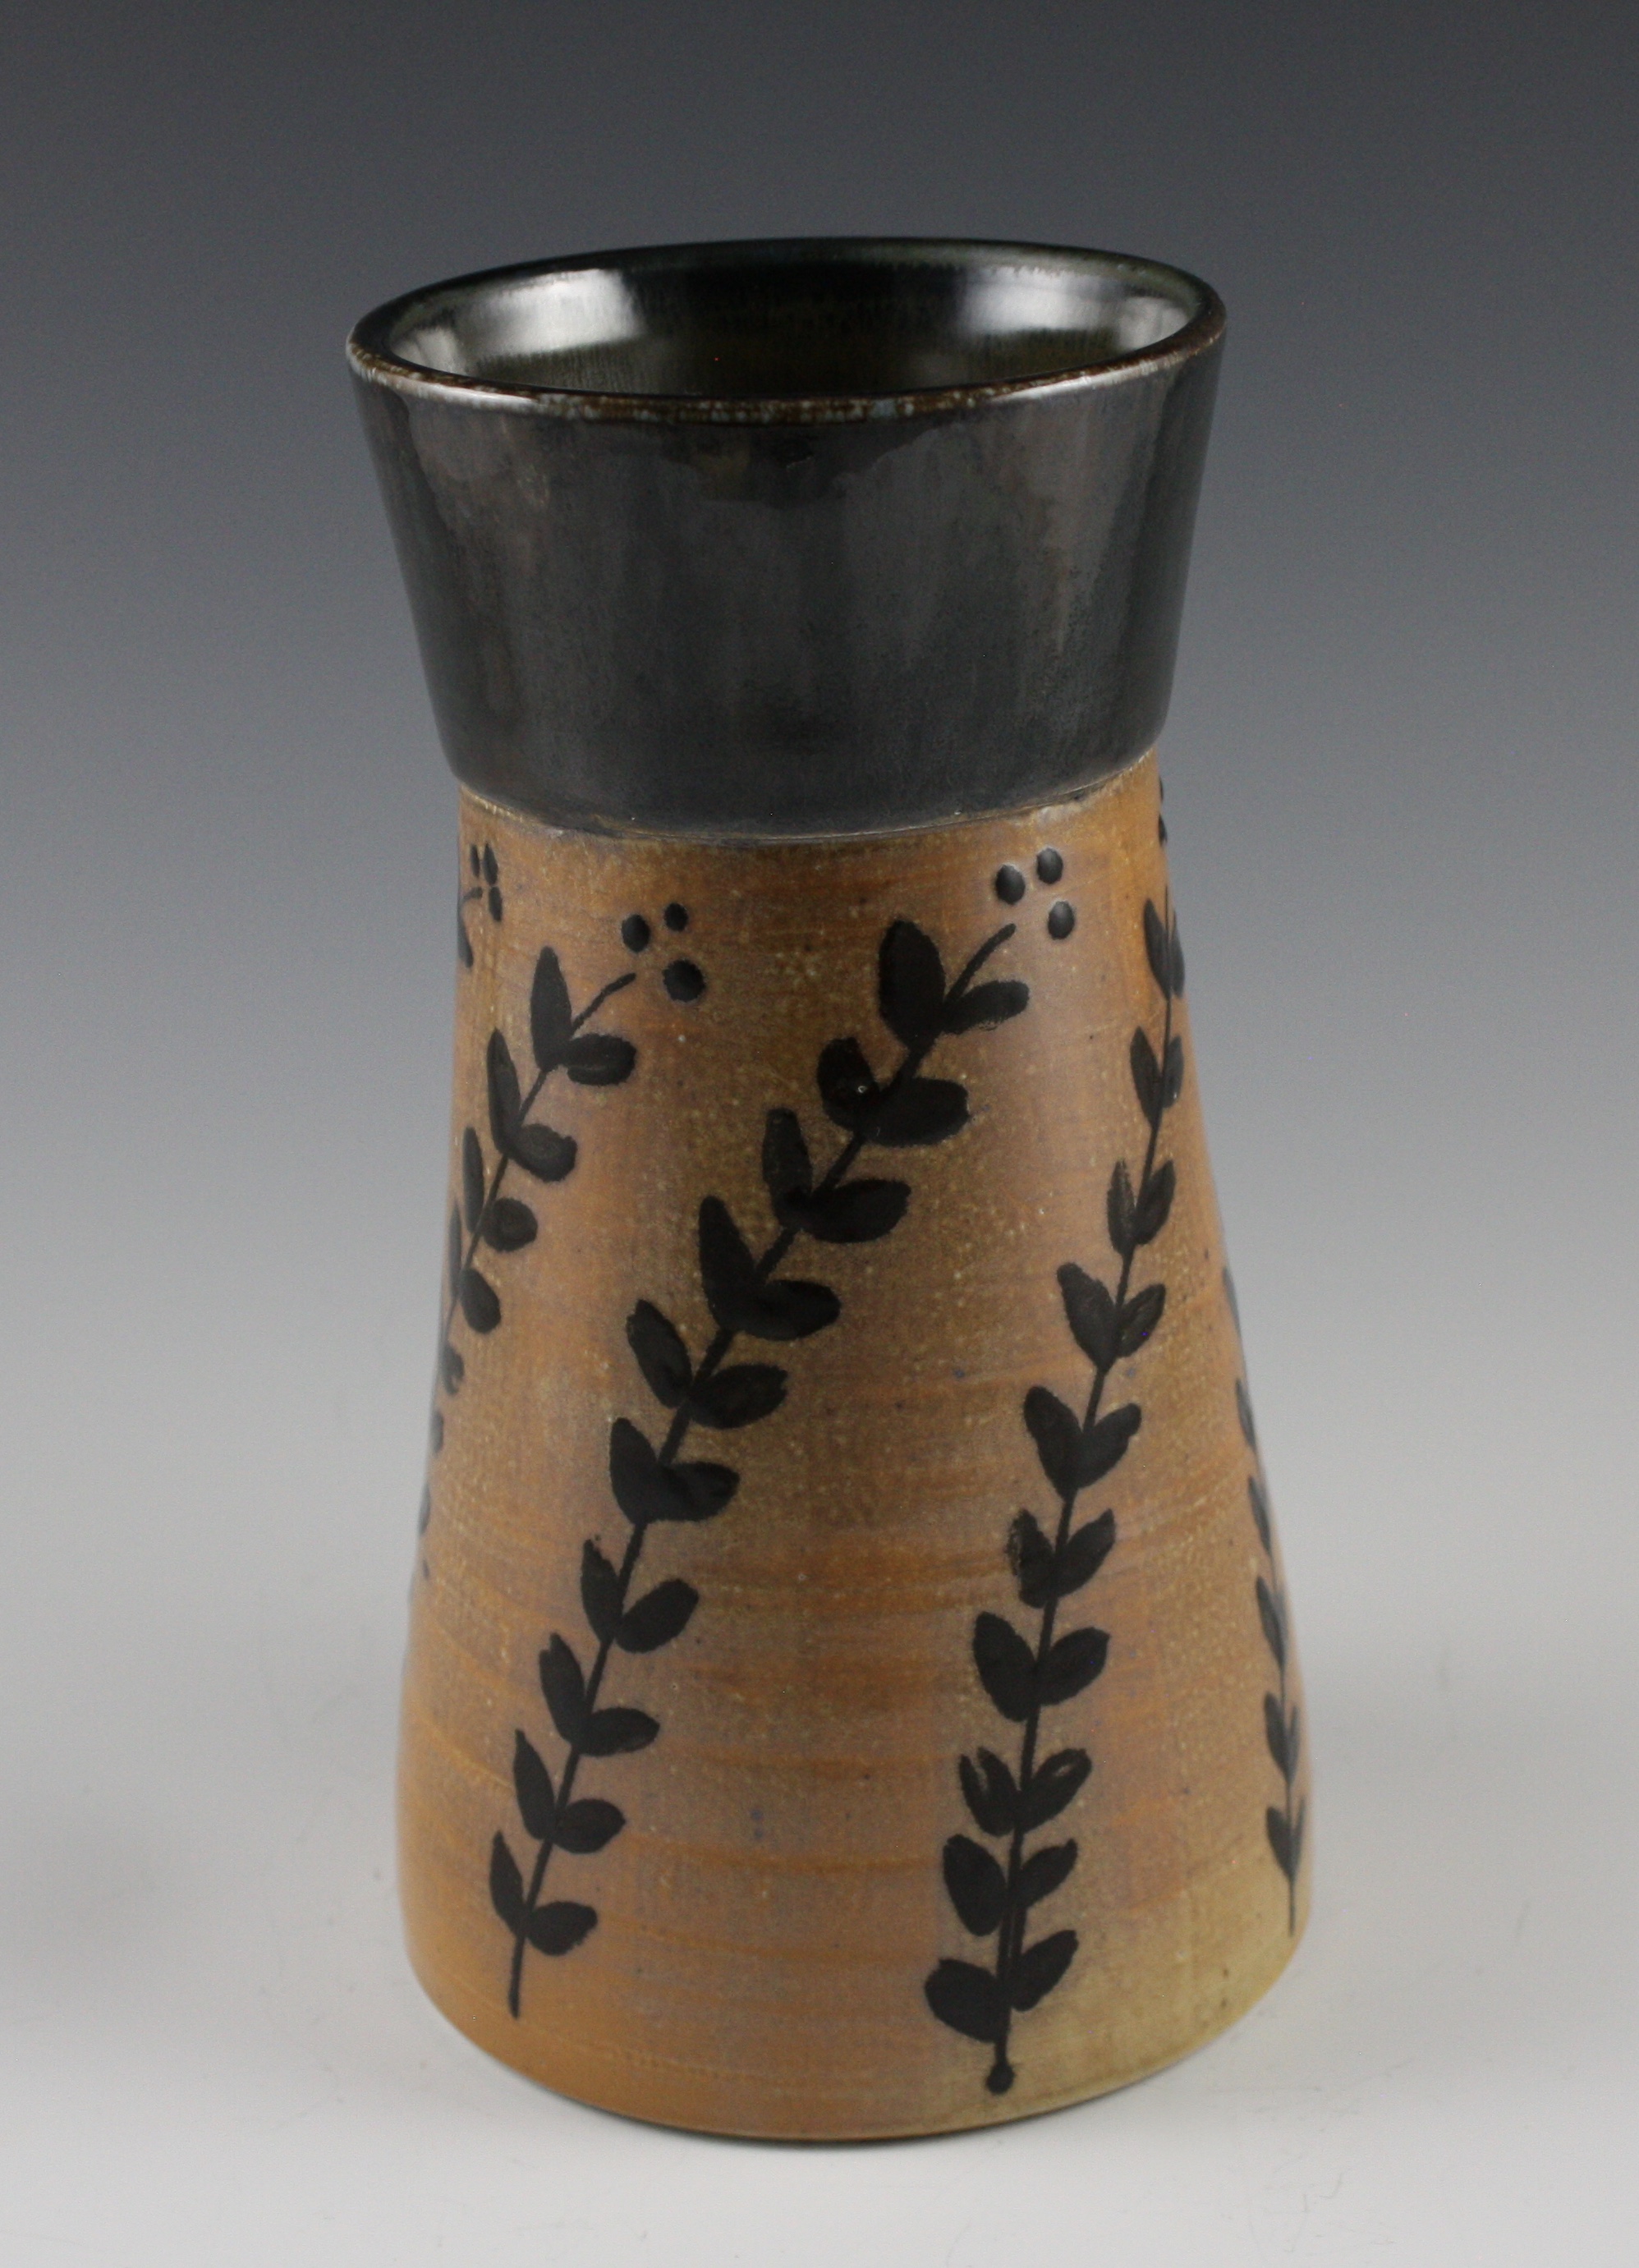 Tall Salt-Glazed Vase with Black Wheat Design